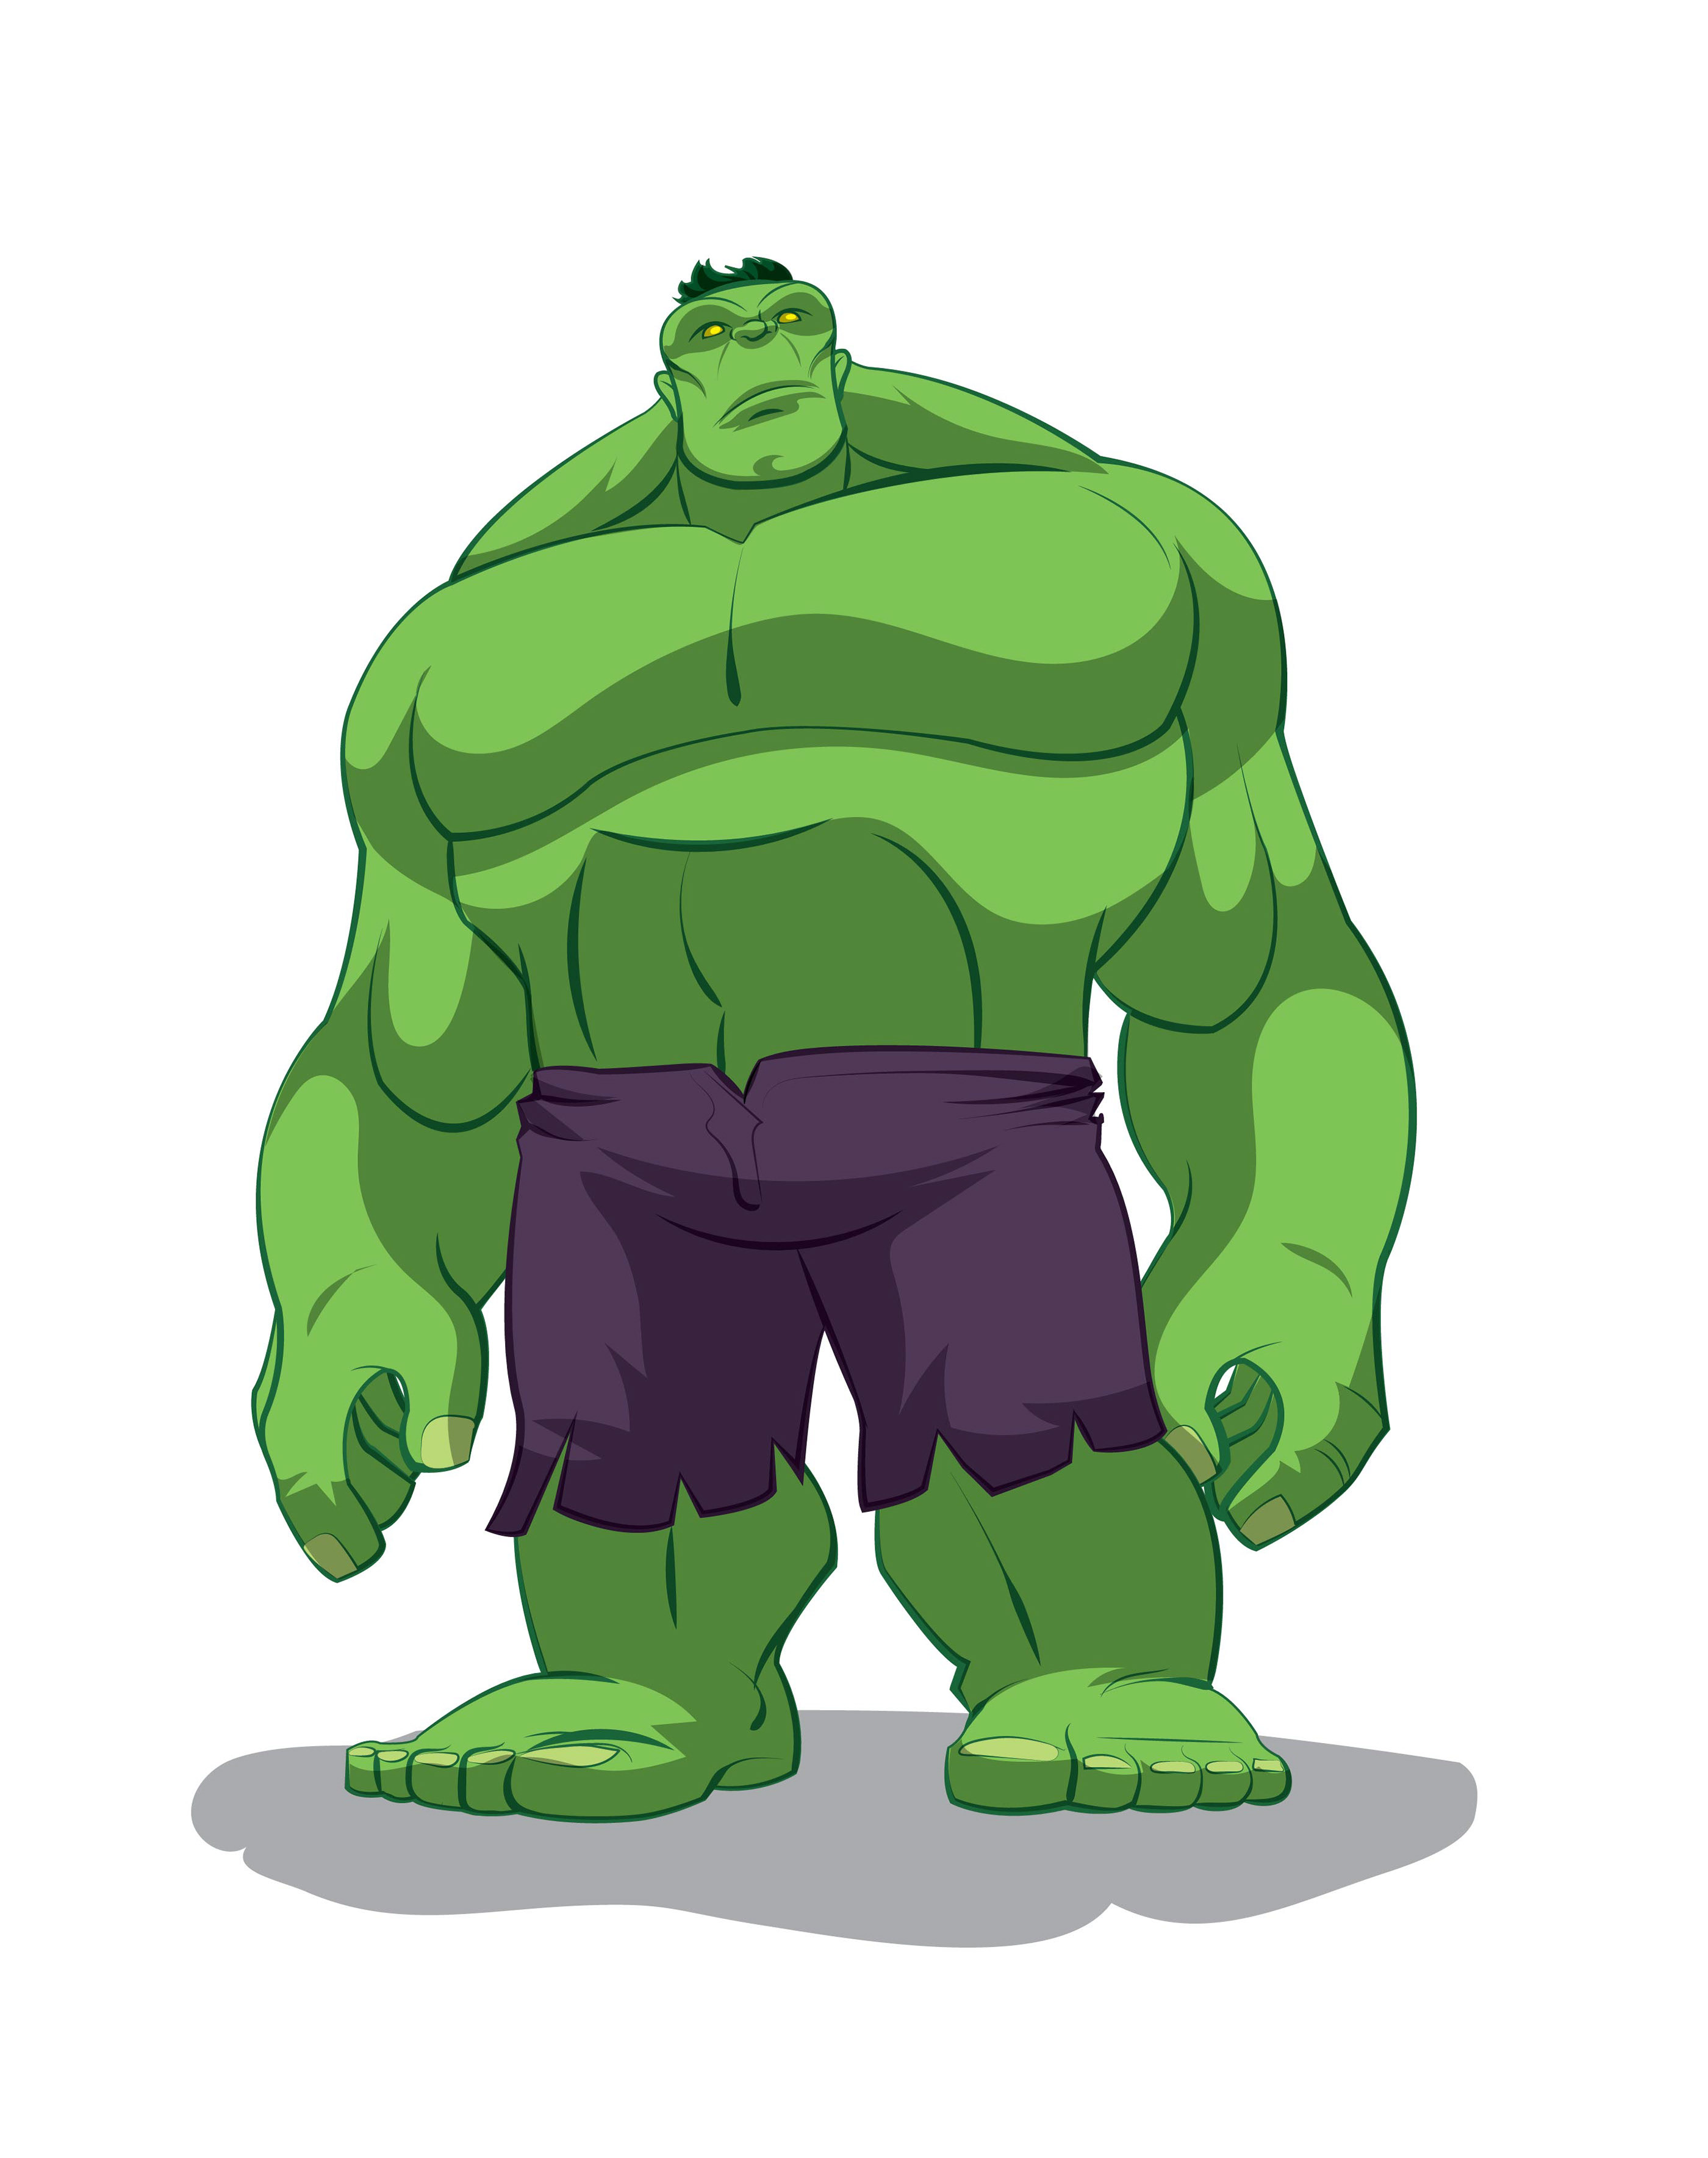 Hulk animated series on Behance